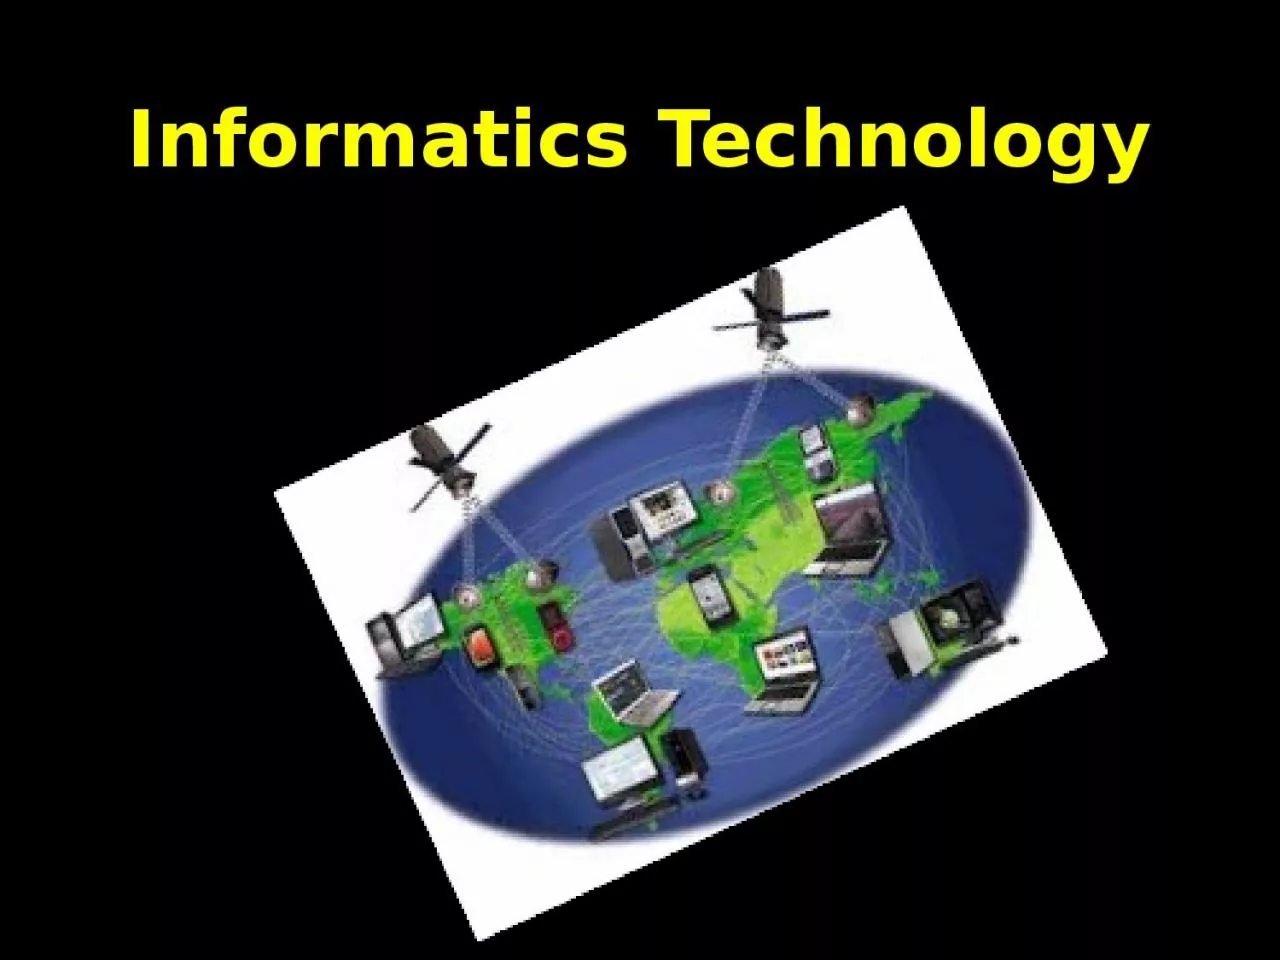 Informatics Technology Tools of Health Informatics